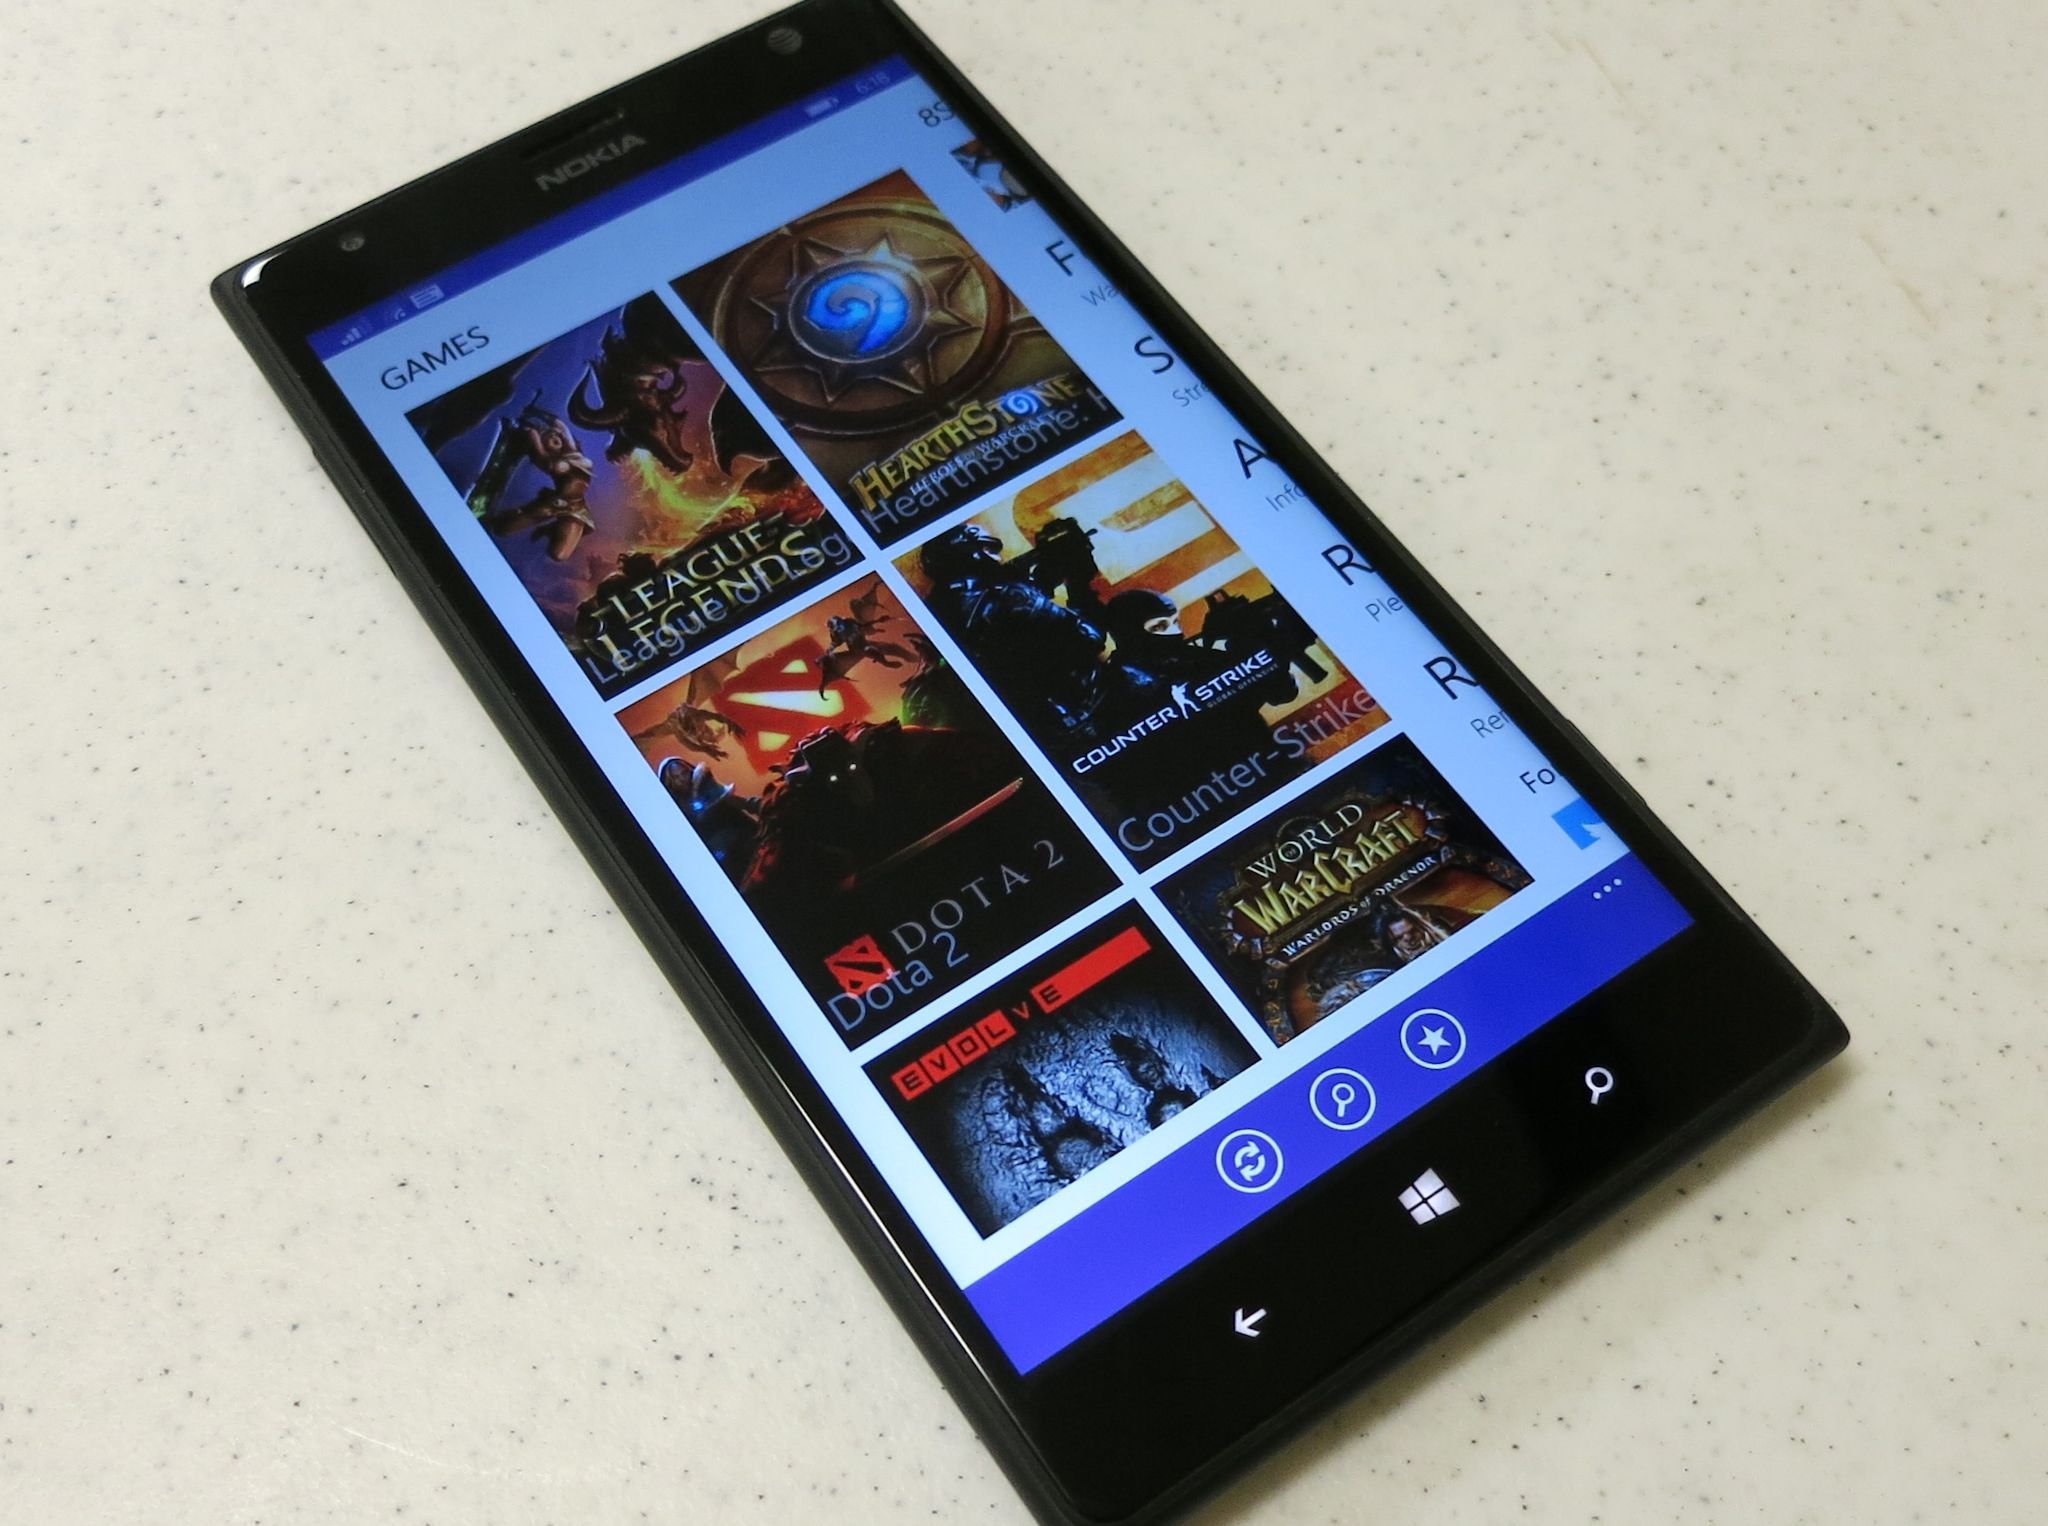 8Stream-Windows-Phone-Lumia-1520-photo.jpg